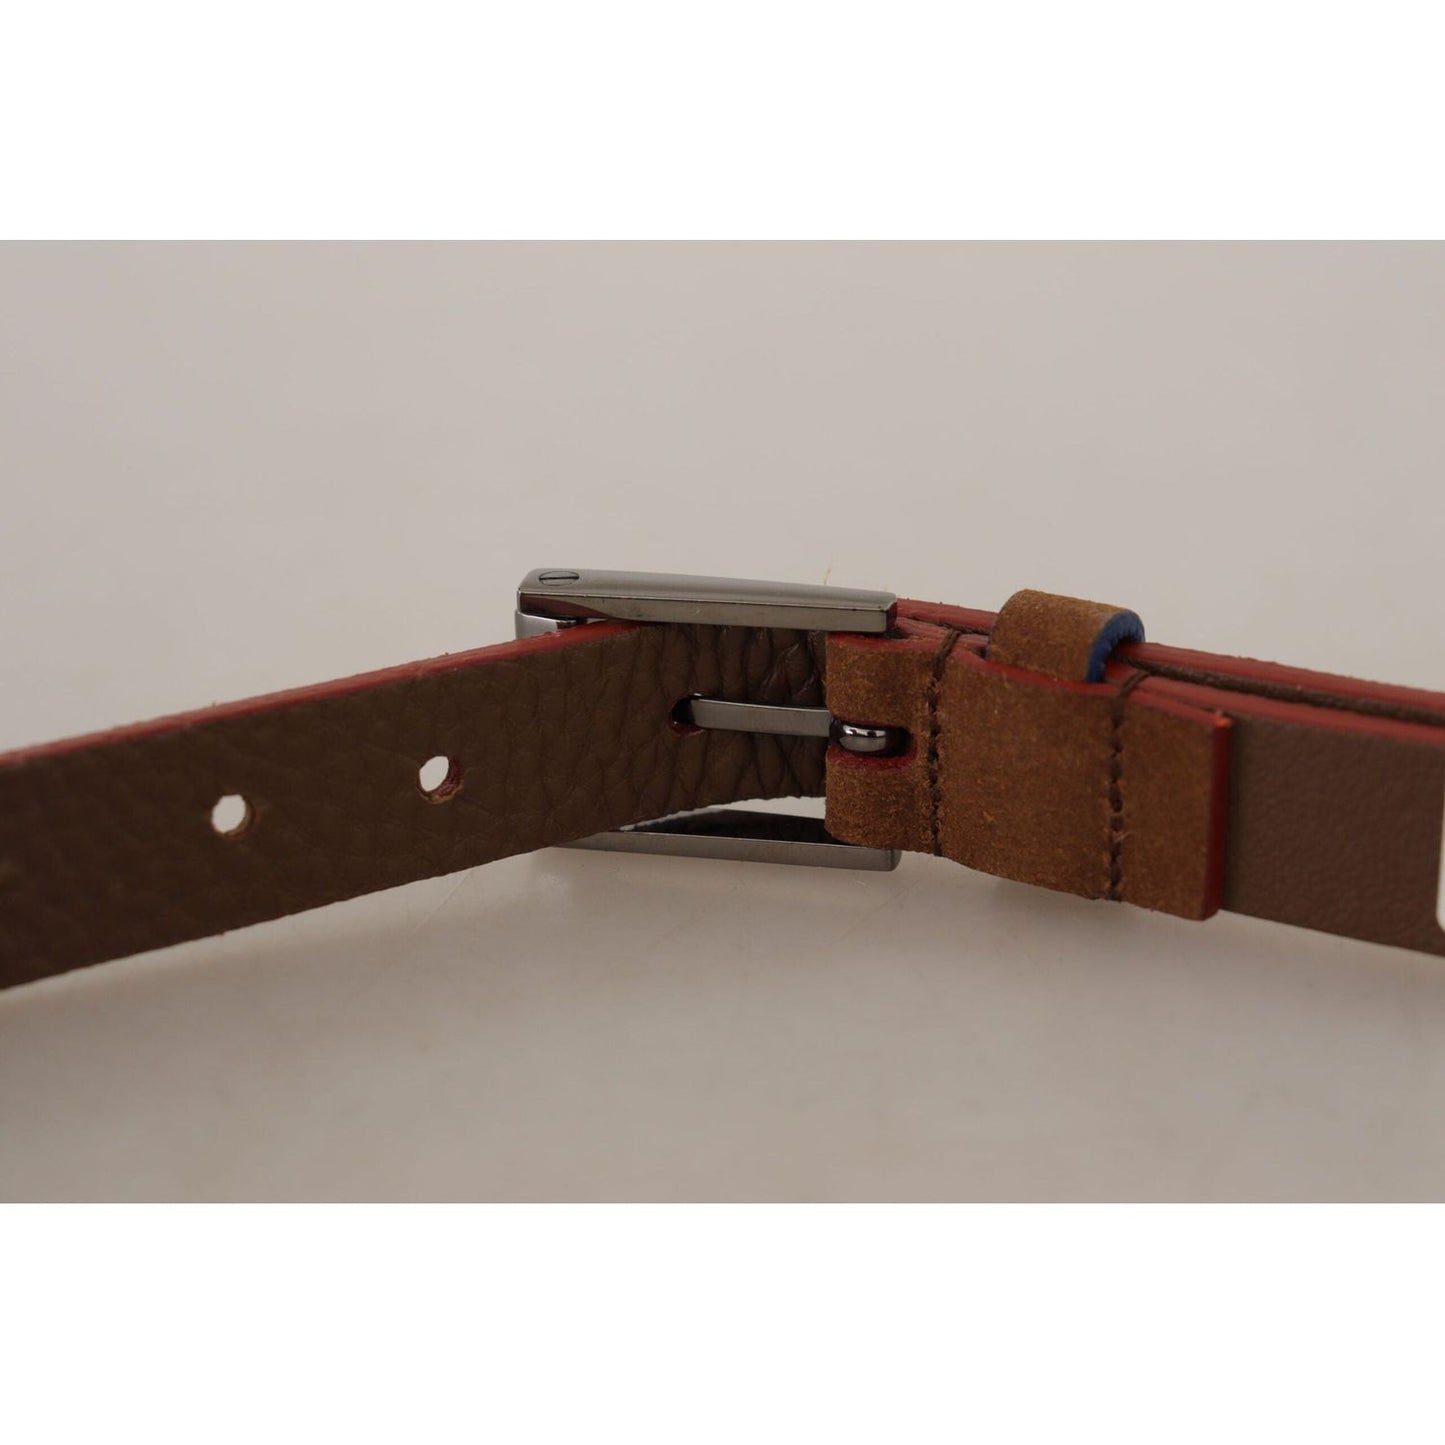 Dolce & Gabbana Chic Suede Belt with Logo Engraved Buckle brown-logo-engraved-metal-waist-buckle-belt